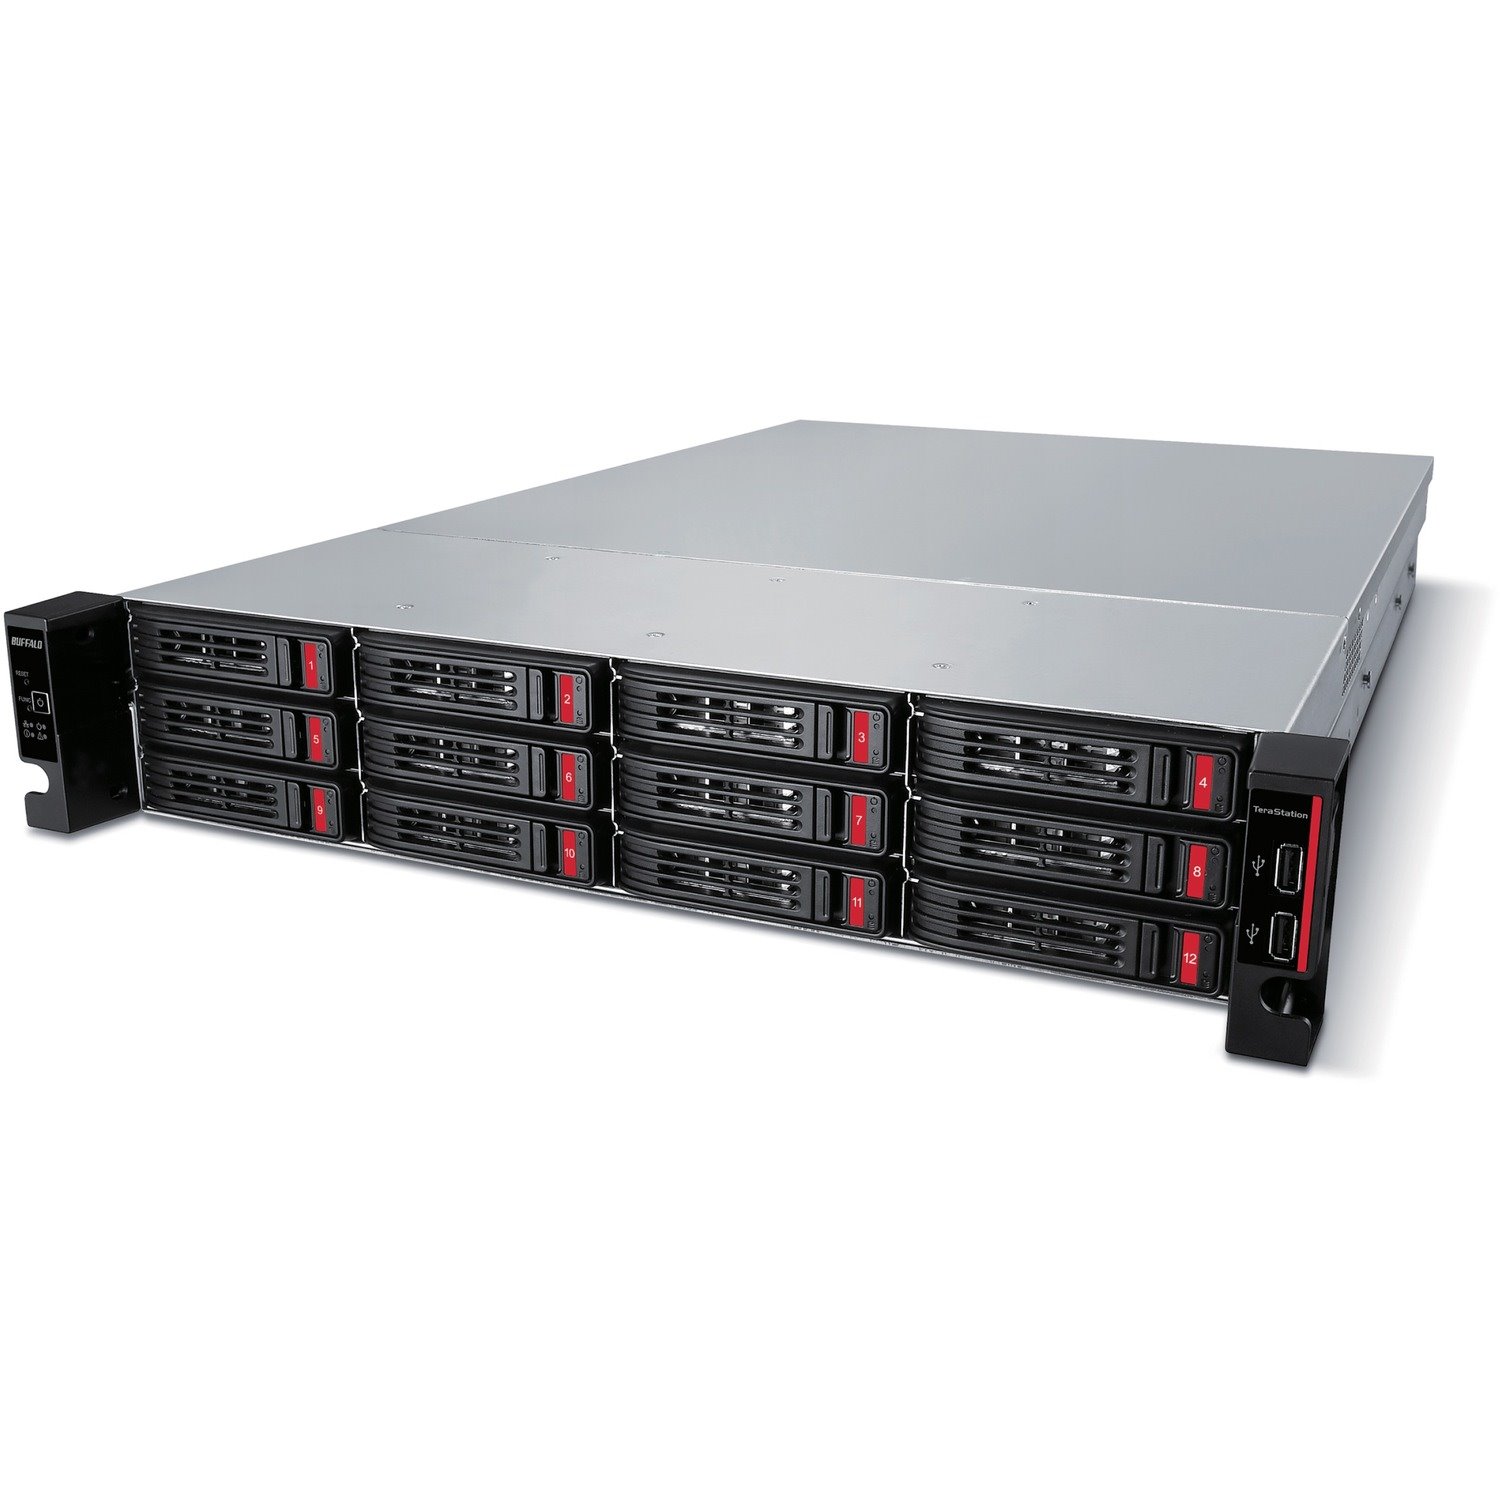 BUFFALO TeraStation 51220 12-Bay 144TB (12x12TB) Business Rackmount NAS Storage Hard Drives Included